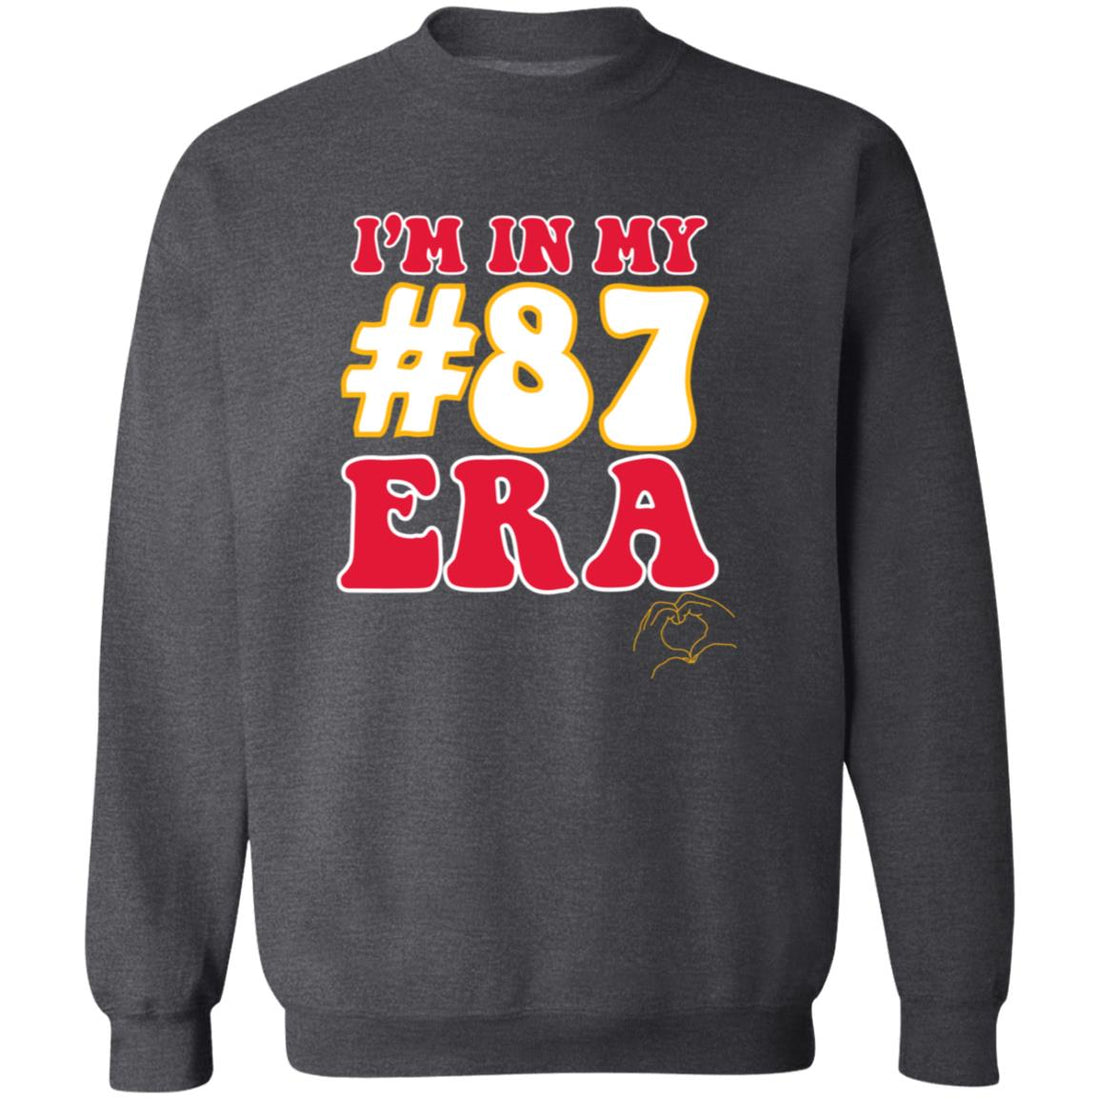 #87 ERA Pullover Sweatshirt - Sweatshirts - Positively Sassy - #87 ERA Pullover Sweatshirt